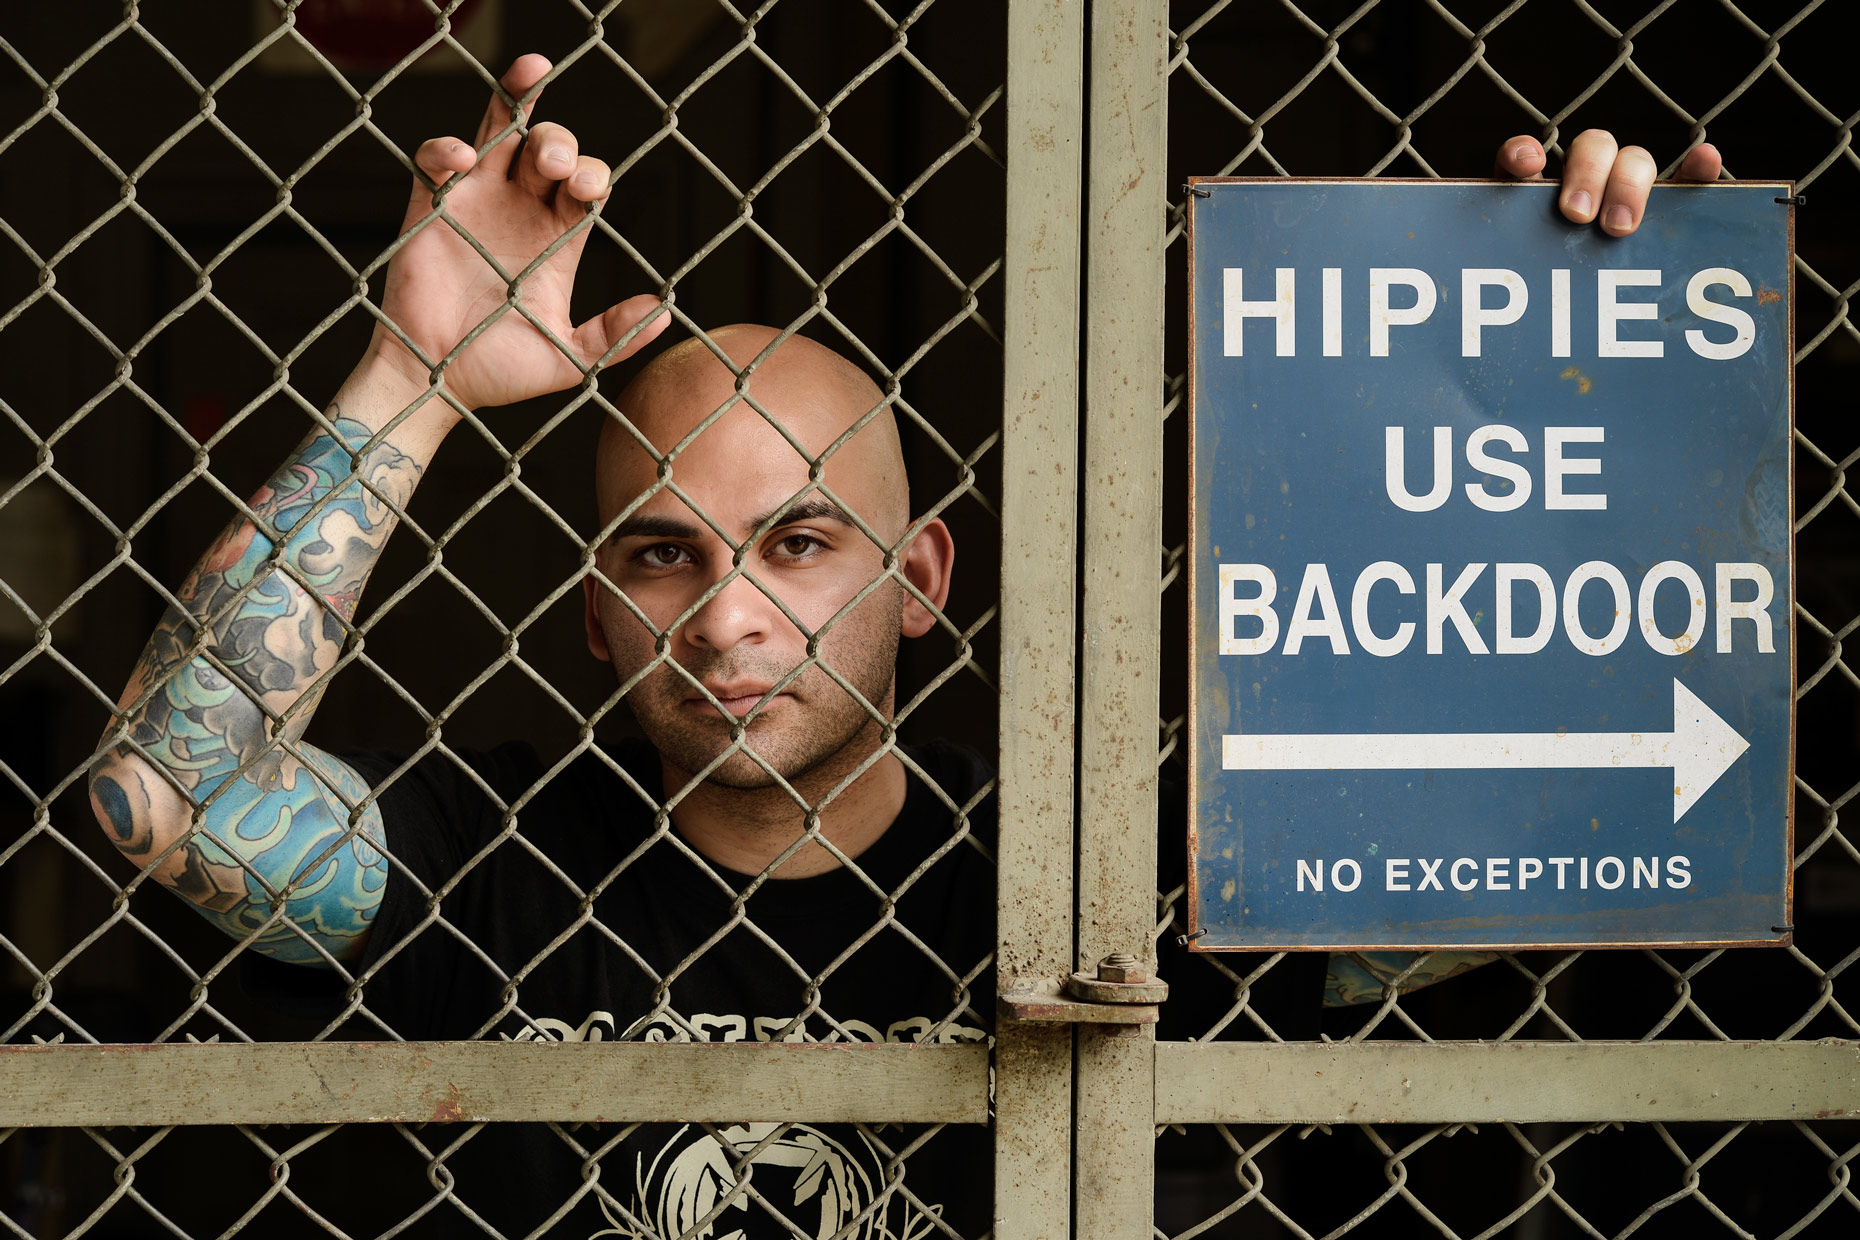 Hippie Use Back Door - Dallas, Texas Editorial photographer Kevin Brown